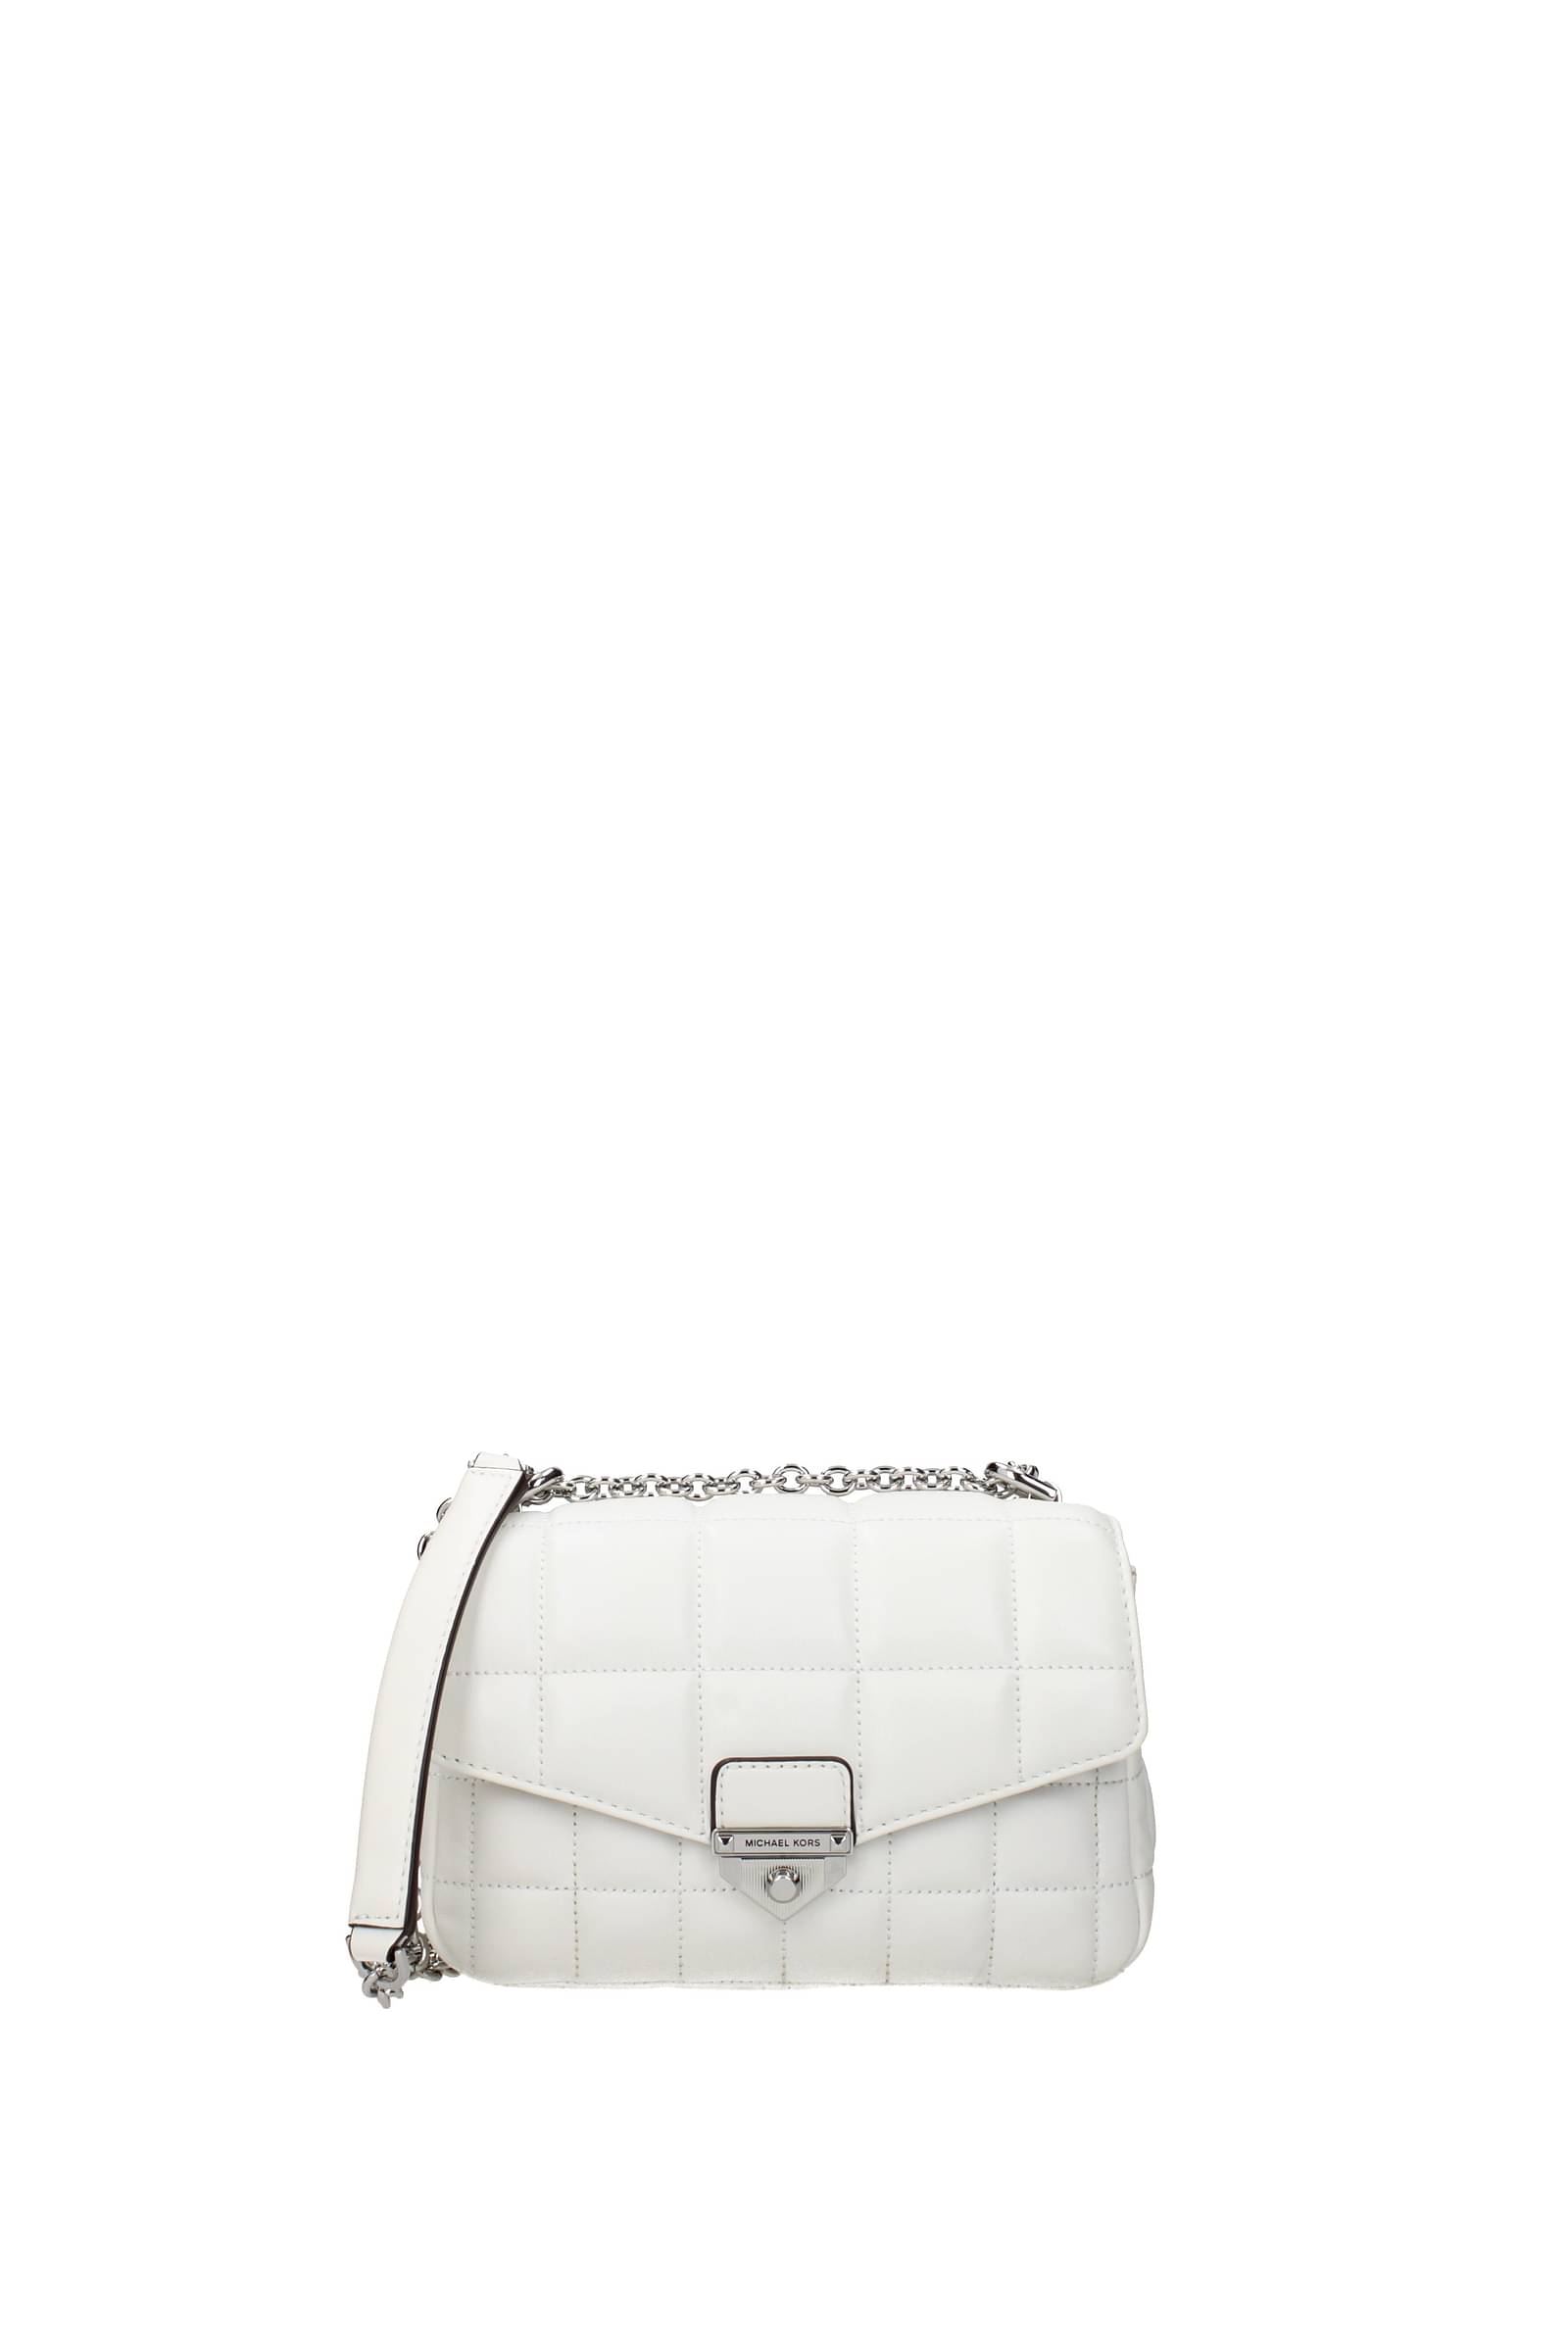 Sale MICHAEL by MICHAEL KORS CROSSBODY Leather Shoulder Bag White 50 Off  Elsa Boutique